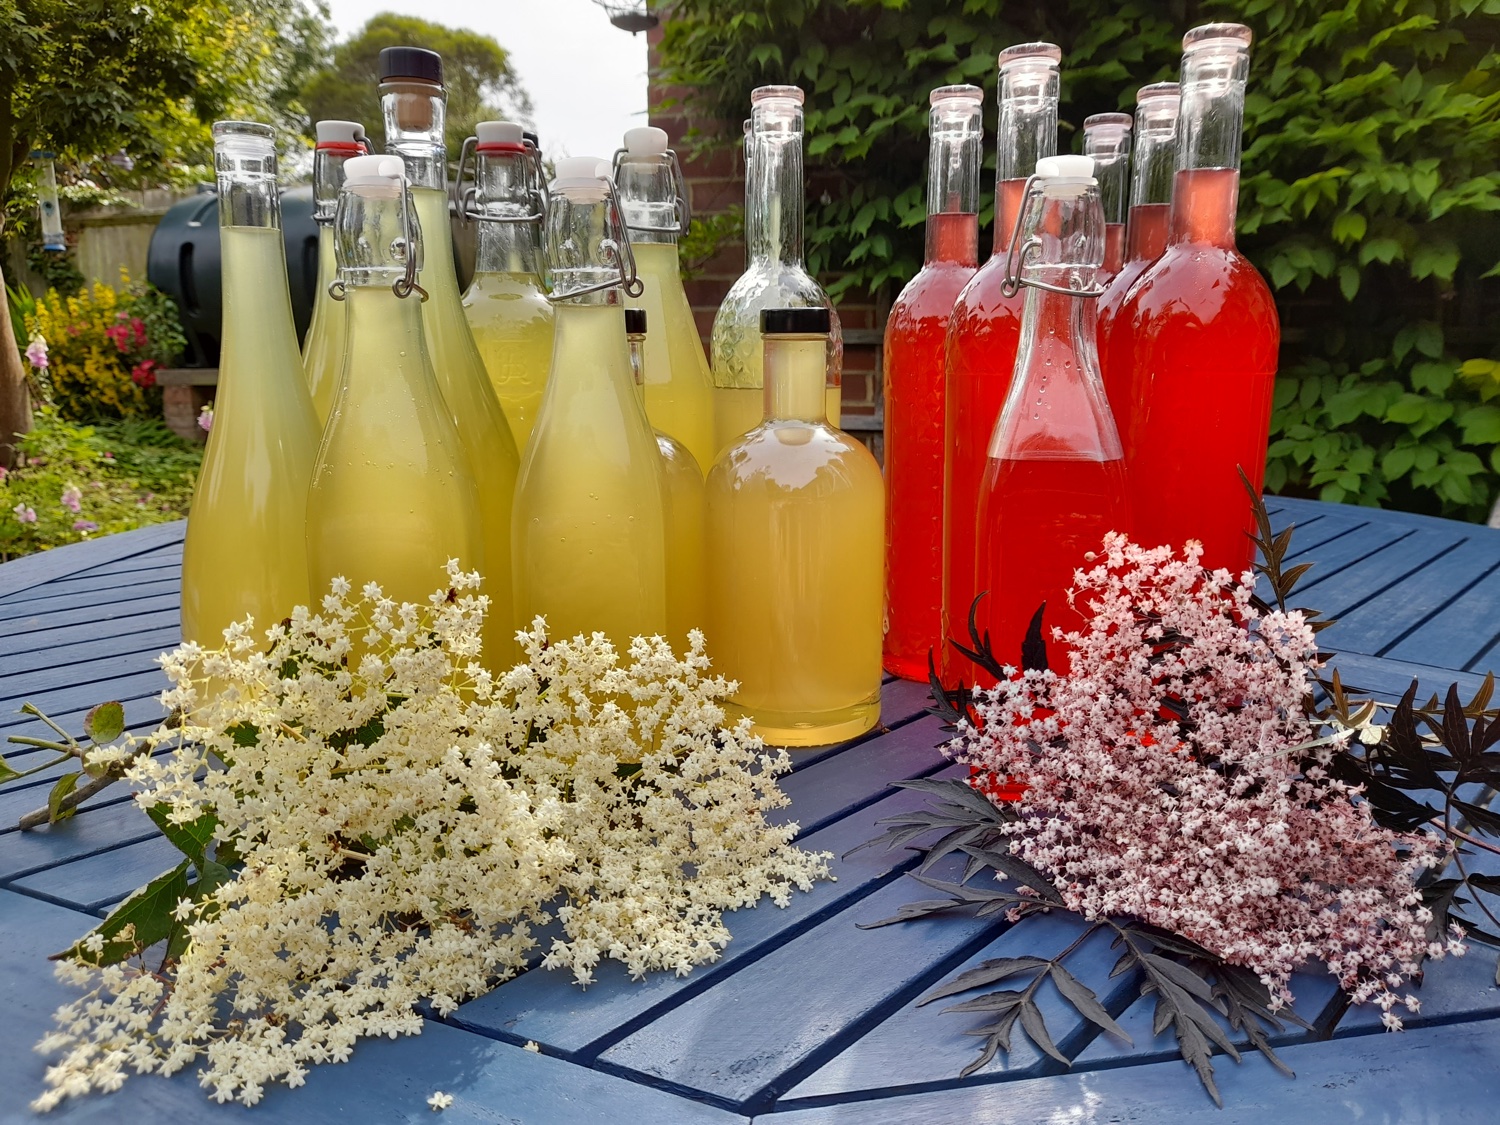 Kent produced eldeflower drink by Angela Jackson-Grillet